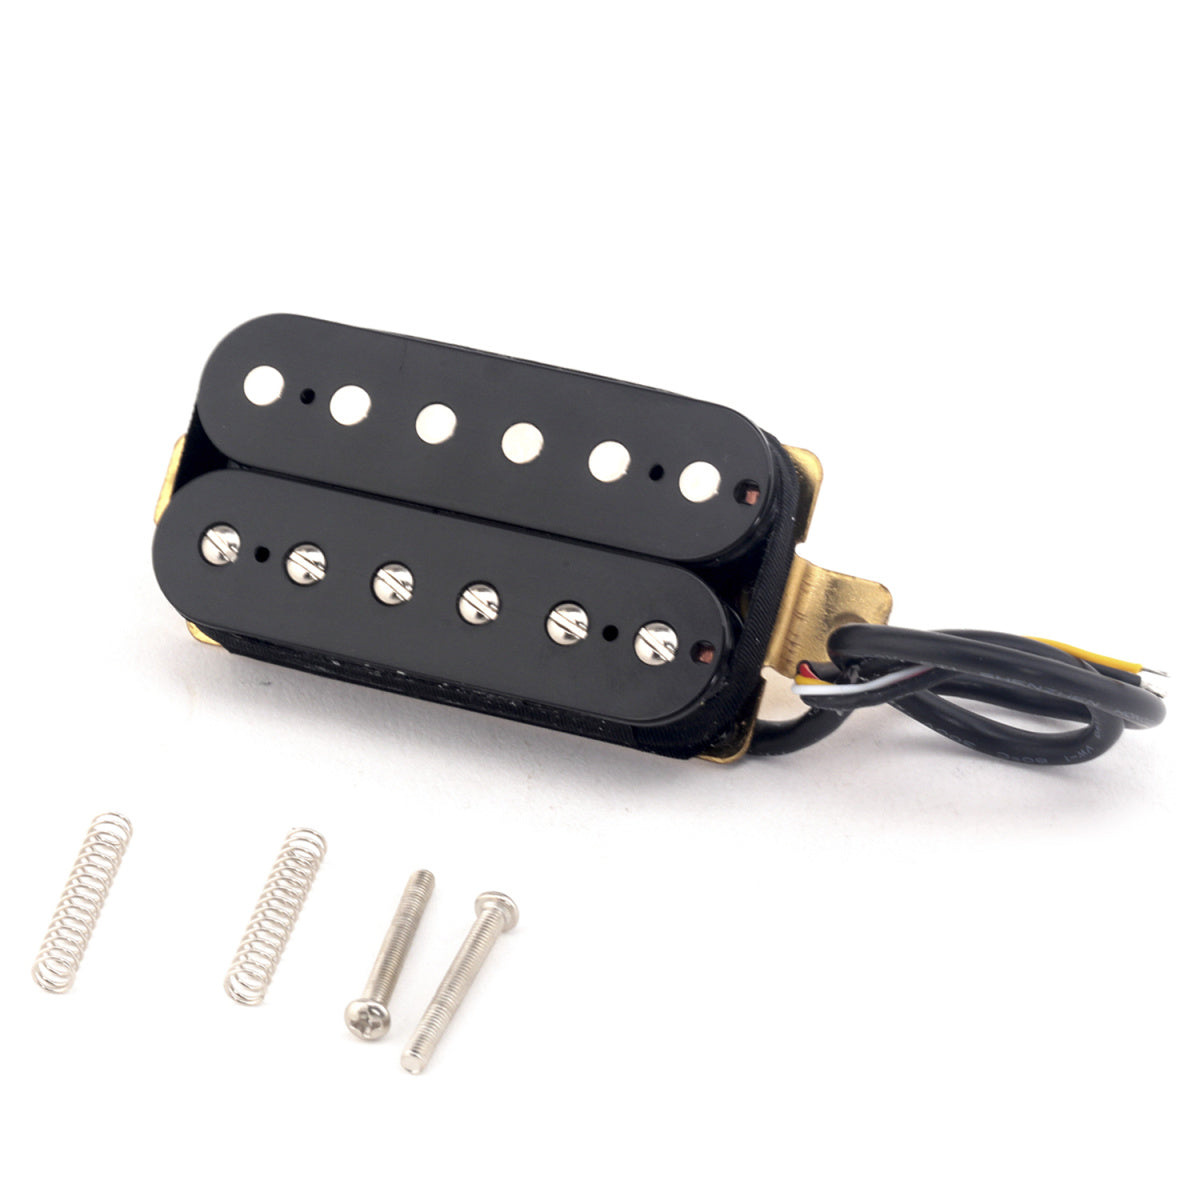 Musiclily Pro 52mm Humbucker Pickup for Electric Guitar Bridge, Black